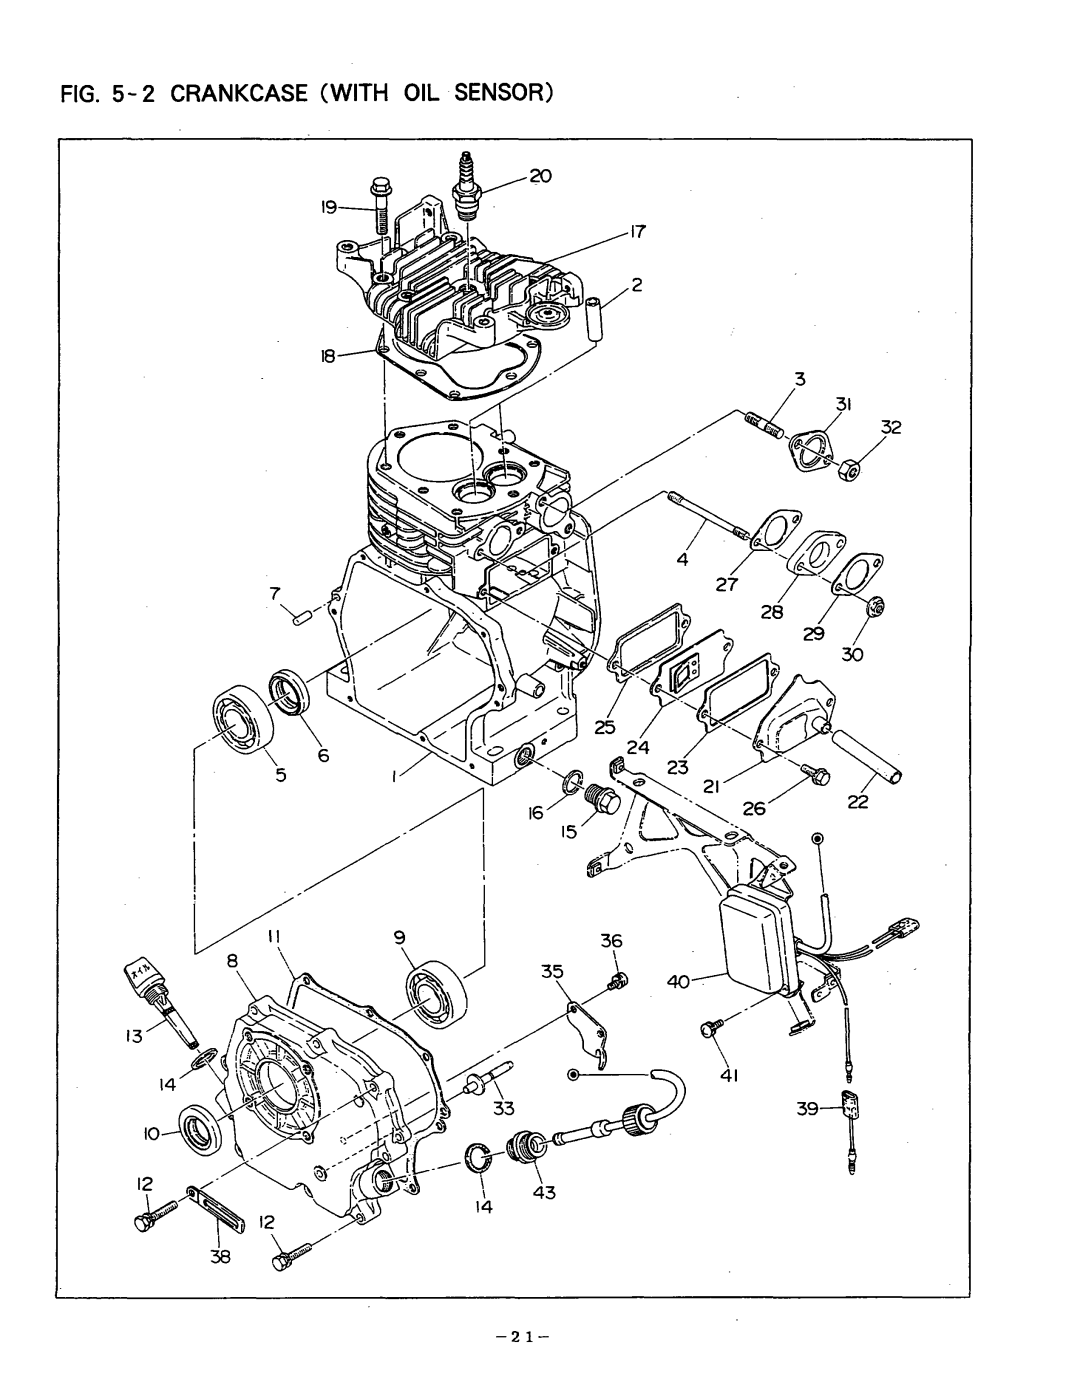 Subaru Robin Power Products R1210 manual 2 CRANKCASE WITH OIL SENSOR 